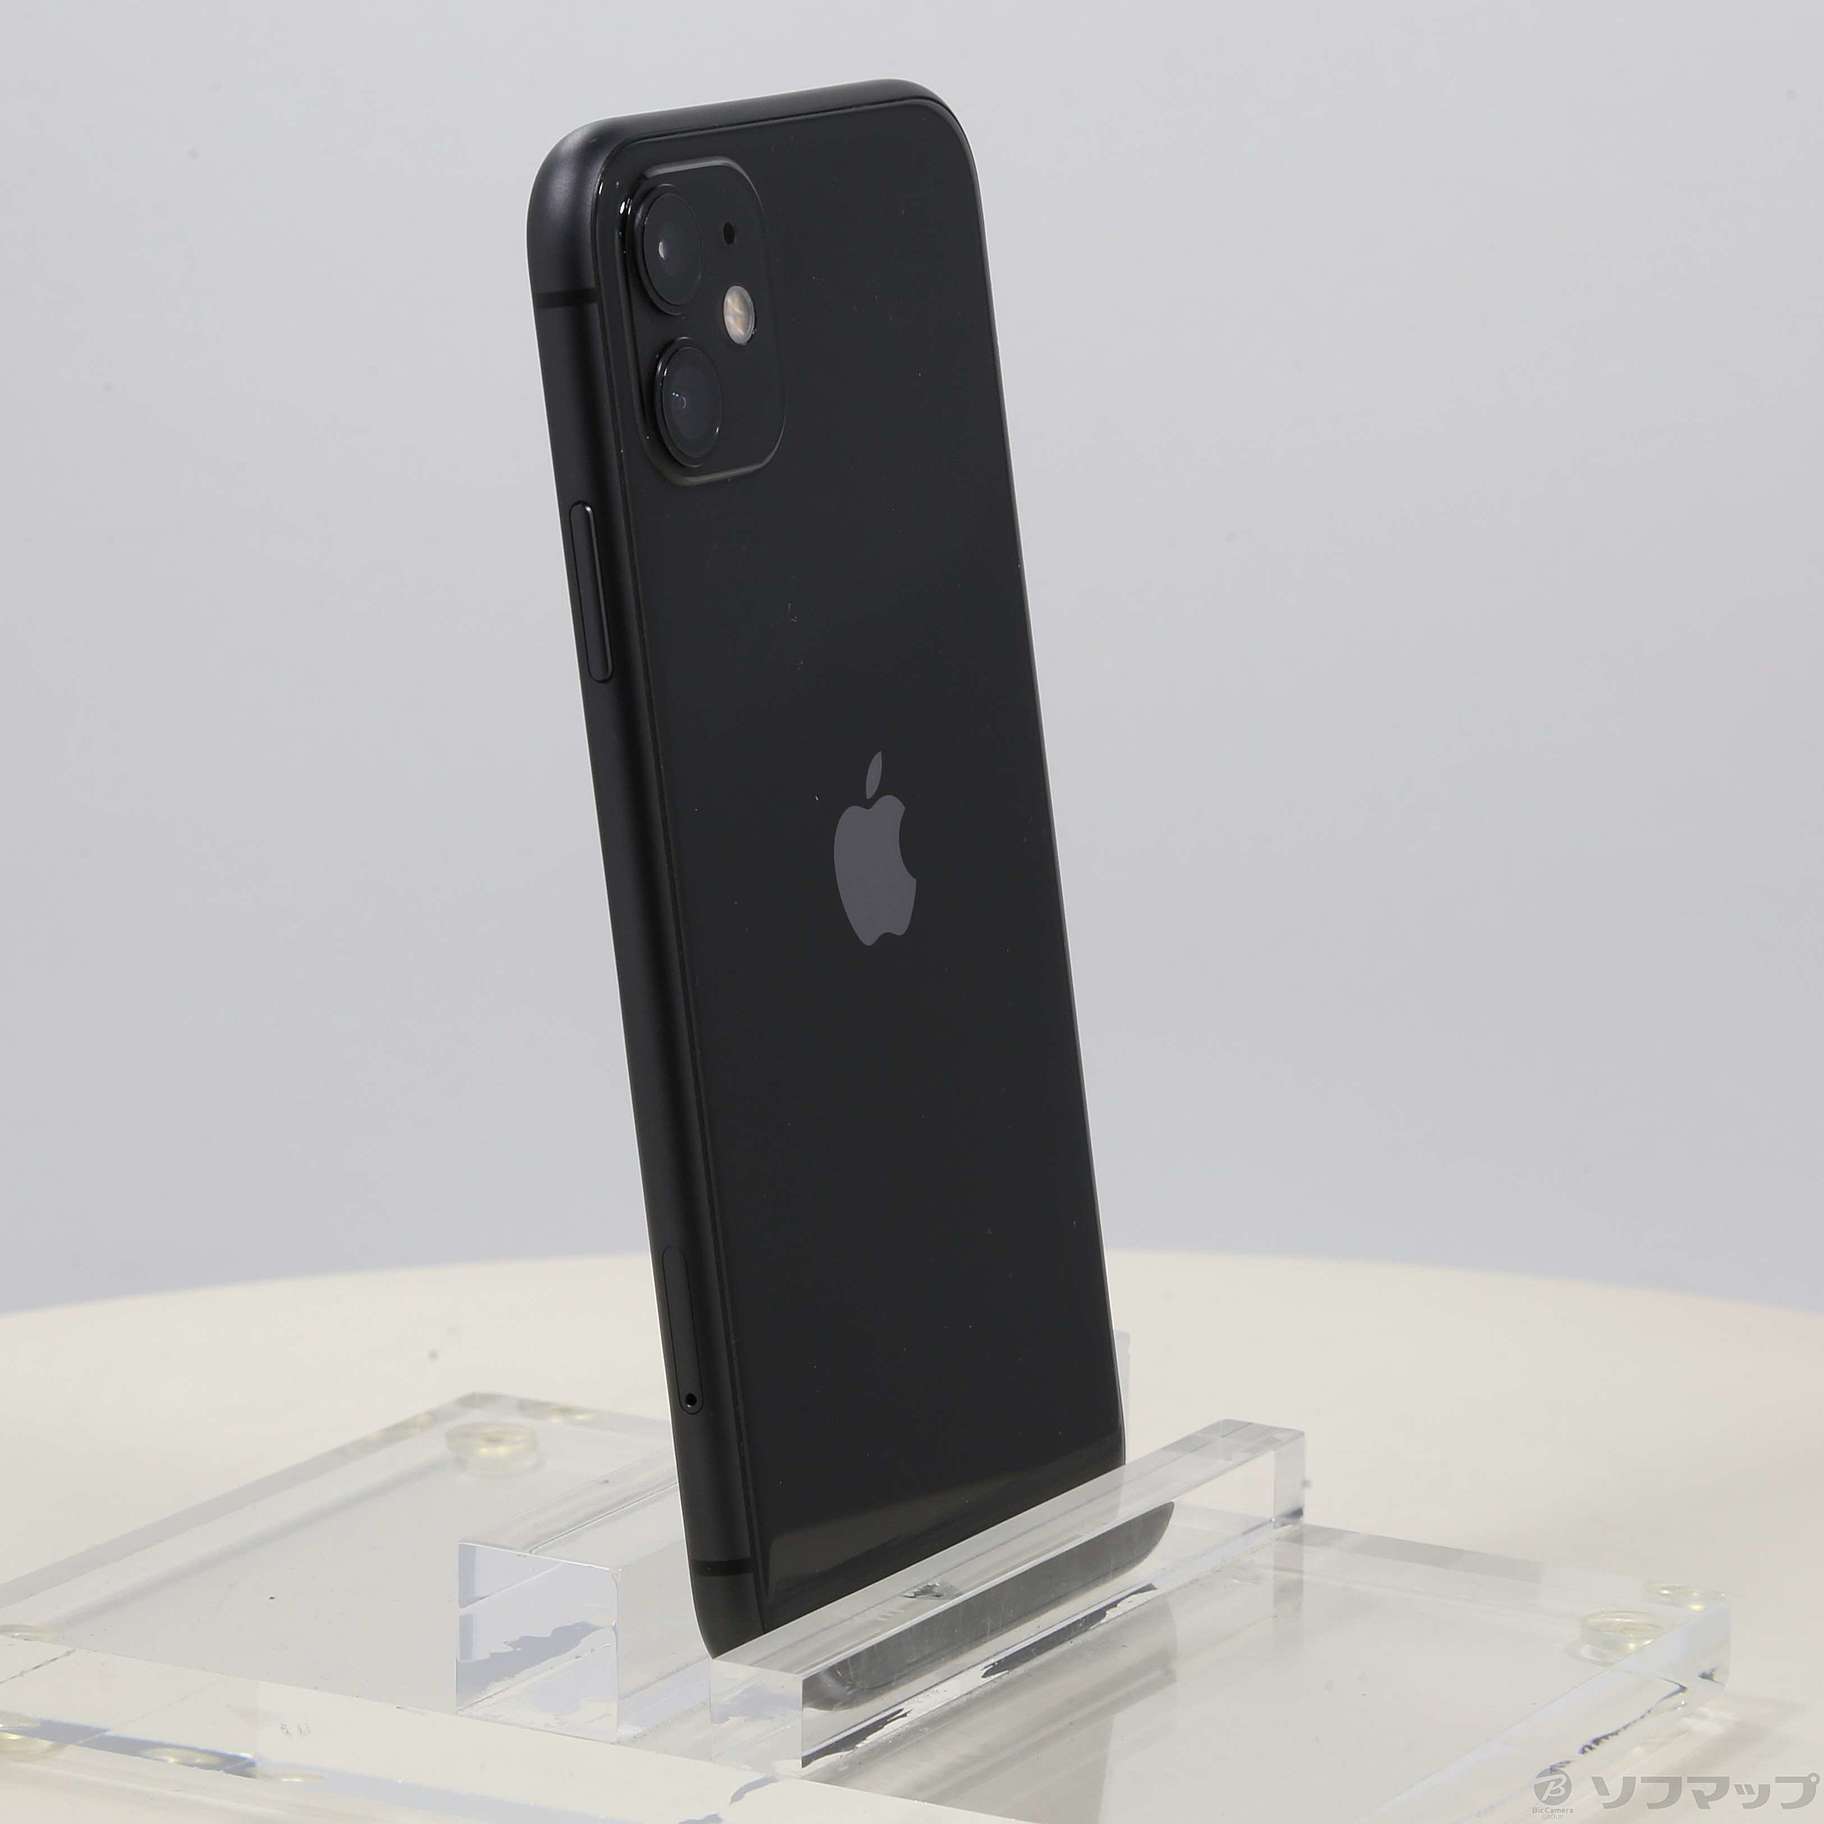 iPhone 11 ブラック 64 GB 白&黒 2台SET! - www.sorbillomenu.com